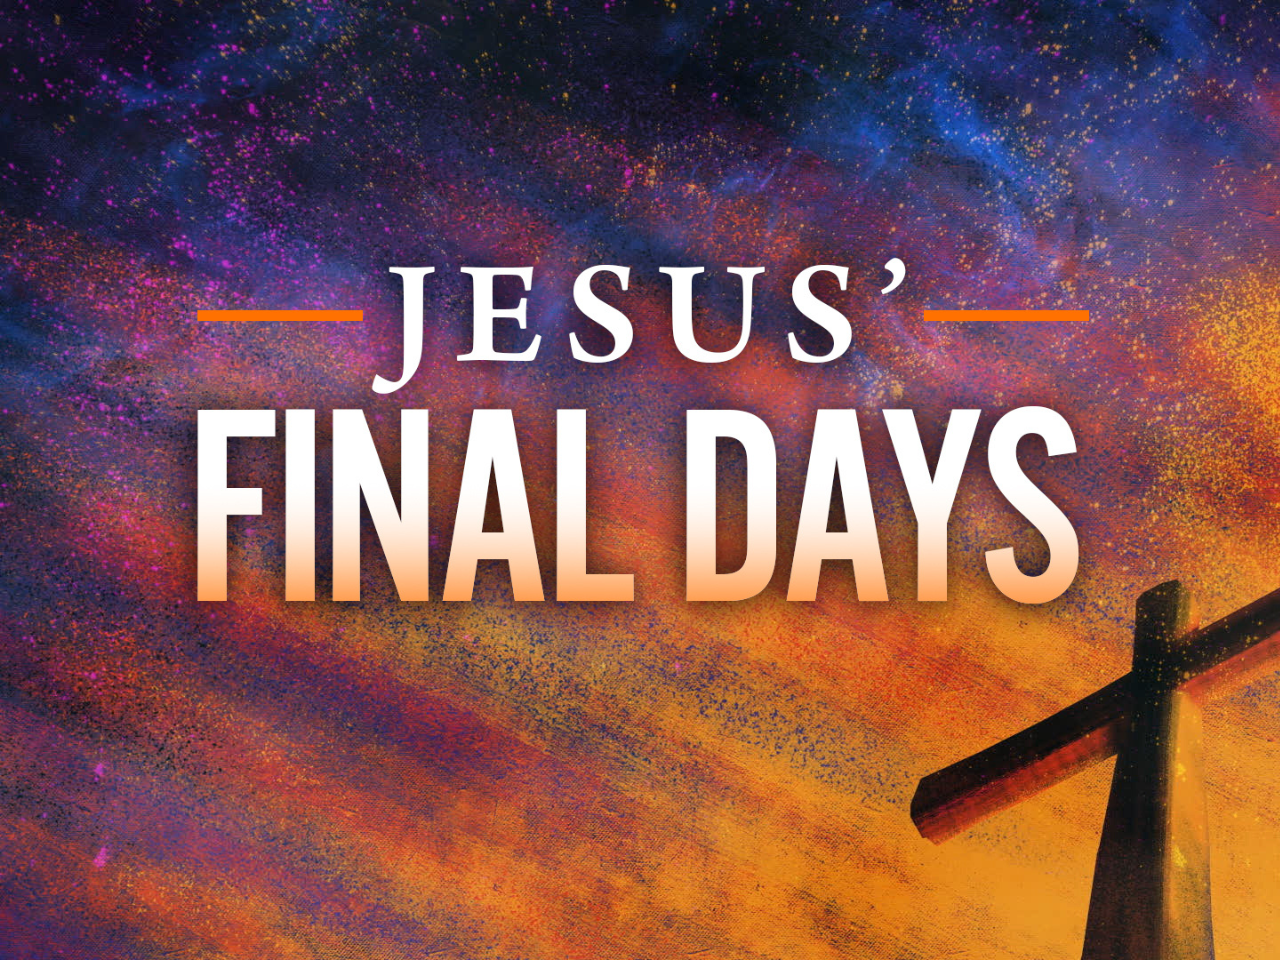 JESUS’ FINAL DAYS #1: Sunday